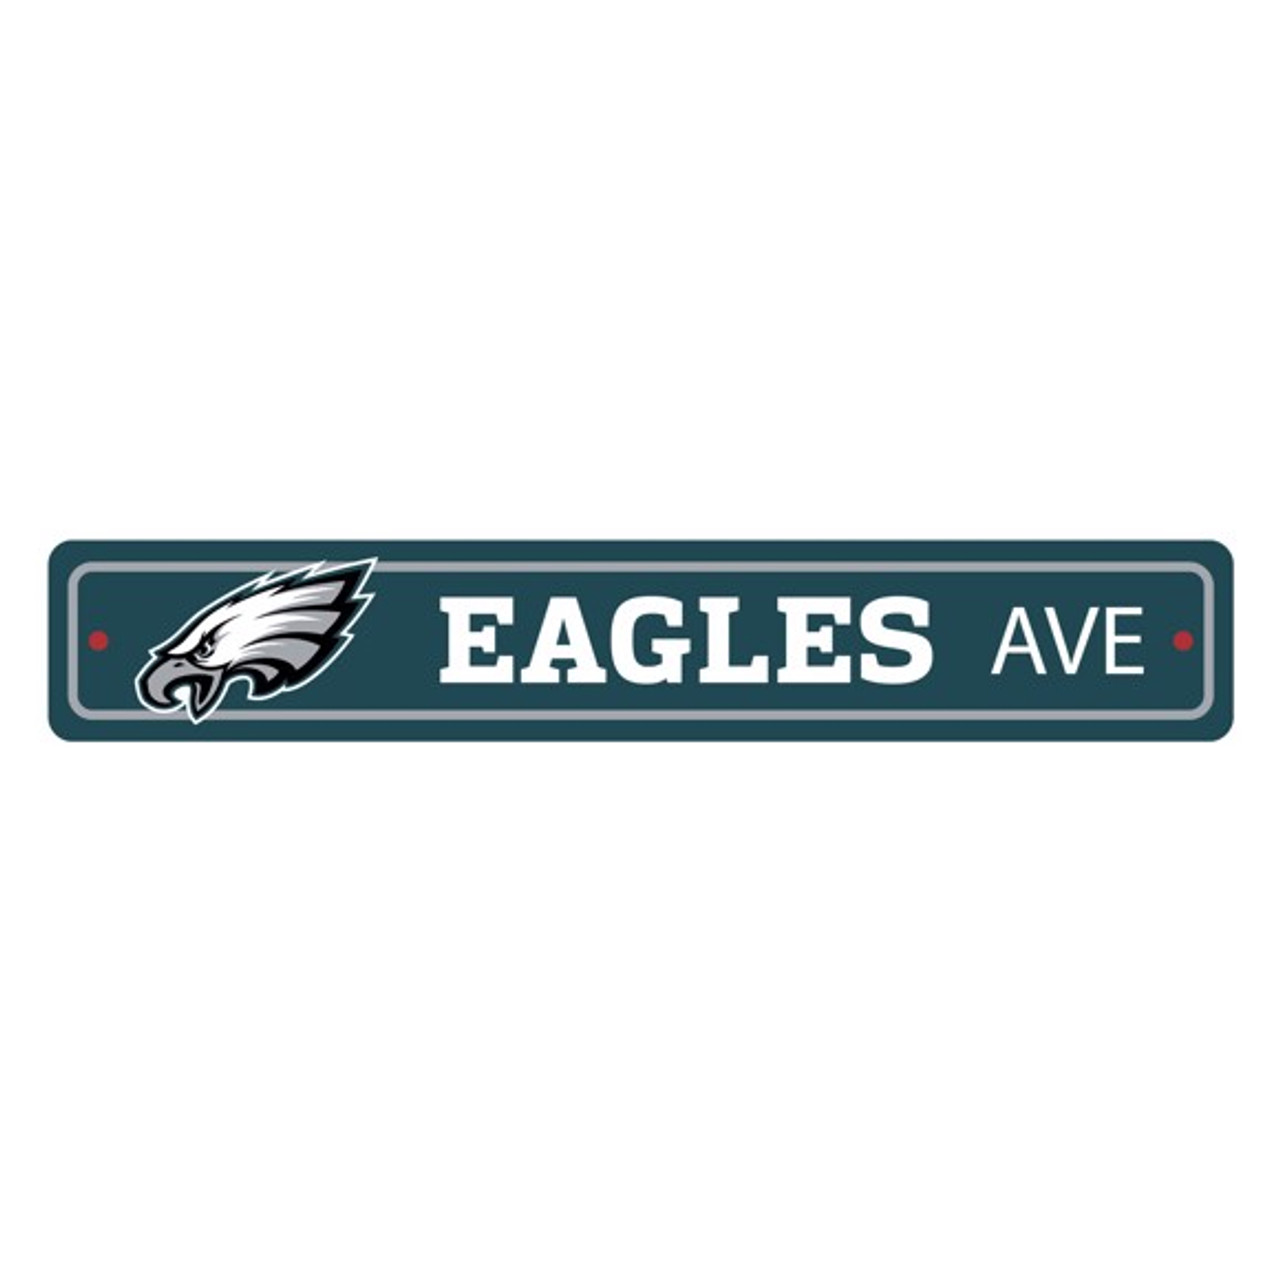 Philadelphia Eagles Street Sign